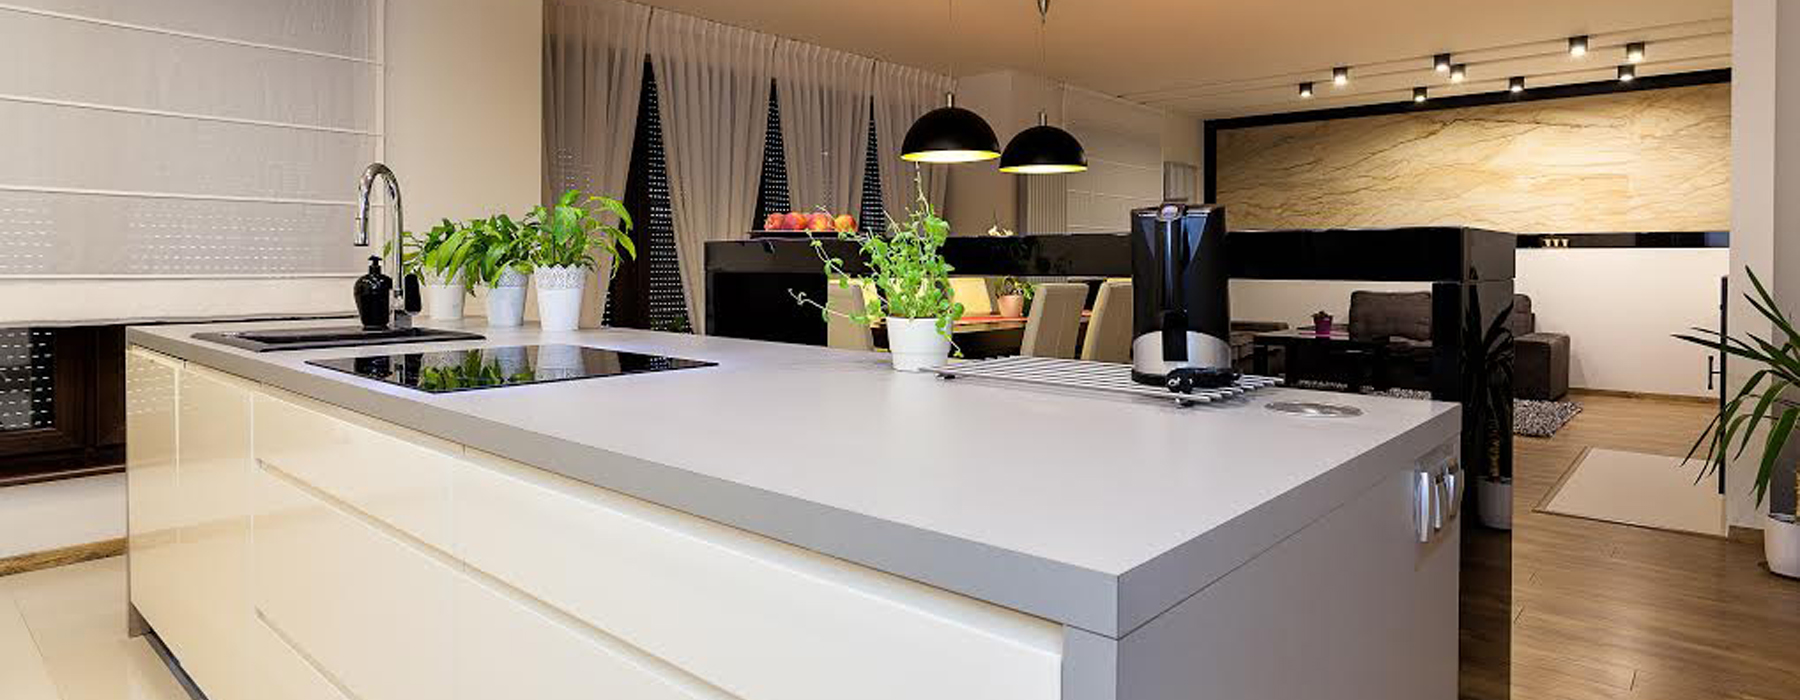 Granite Kitchen Worktop Gives Your Kitchen A Smart Look